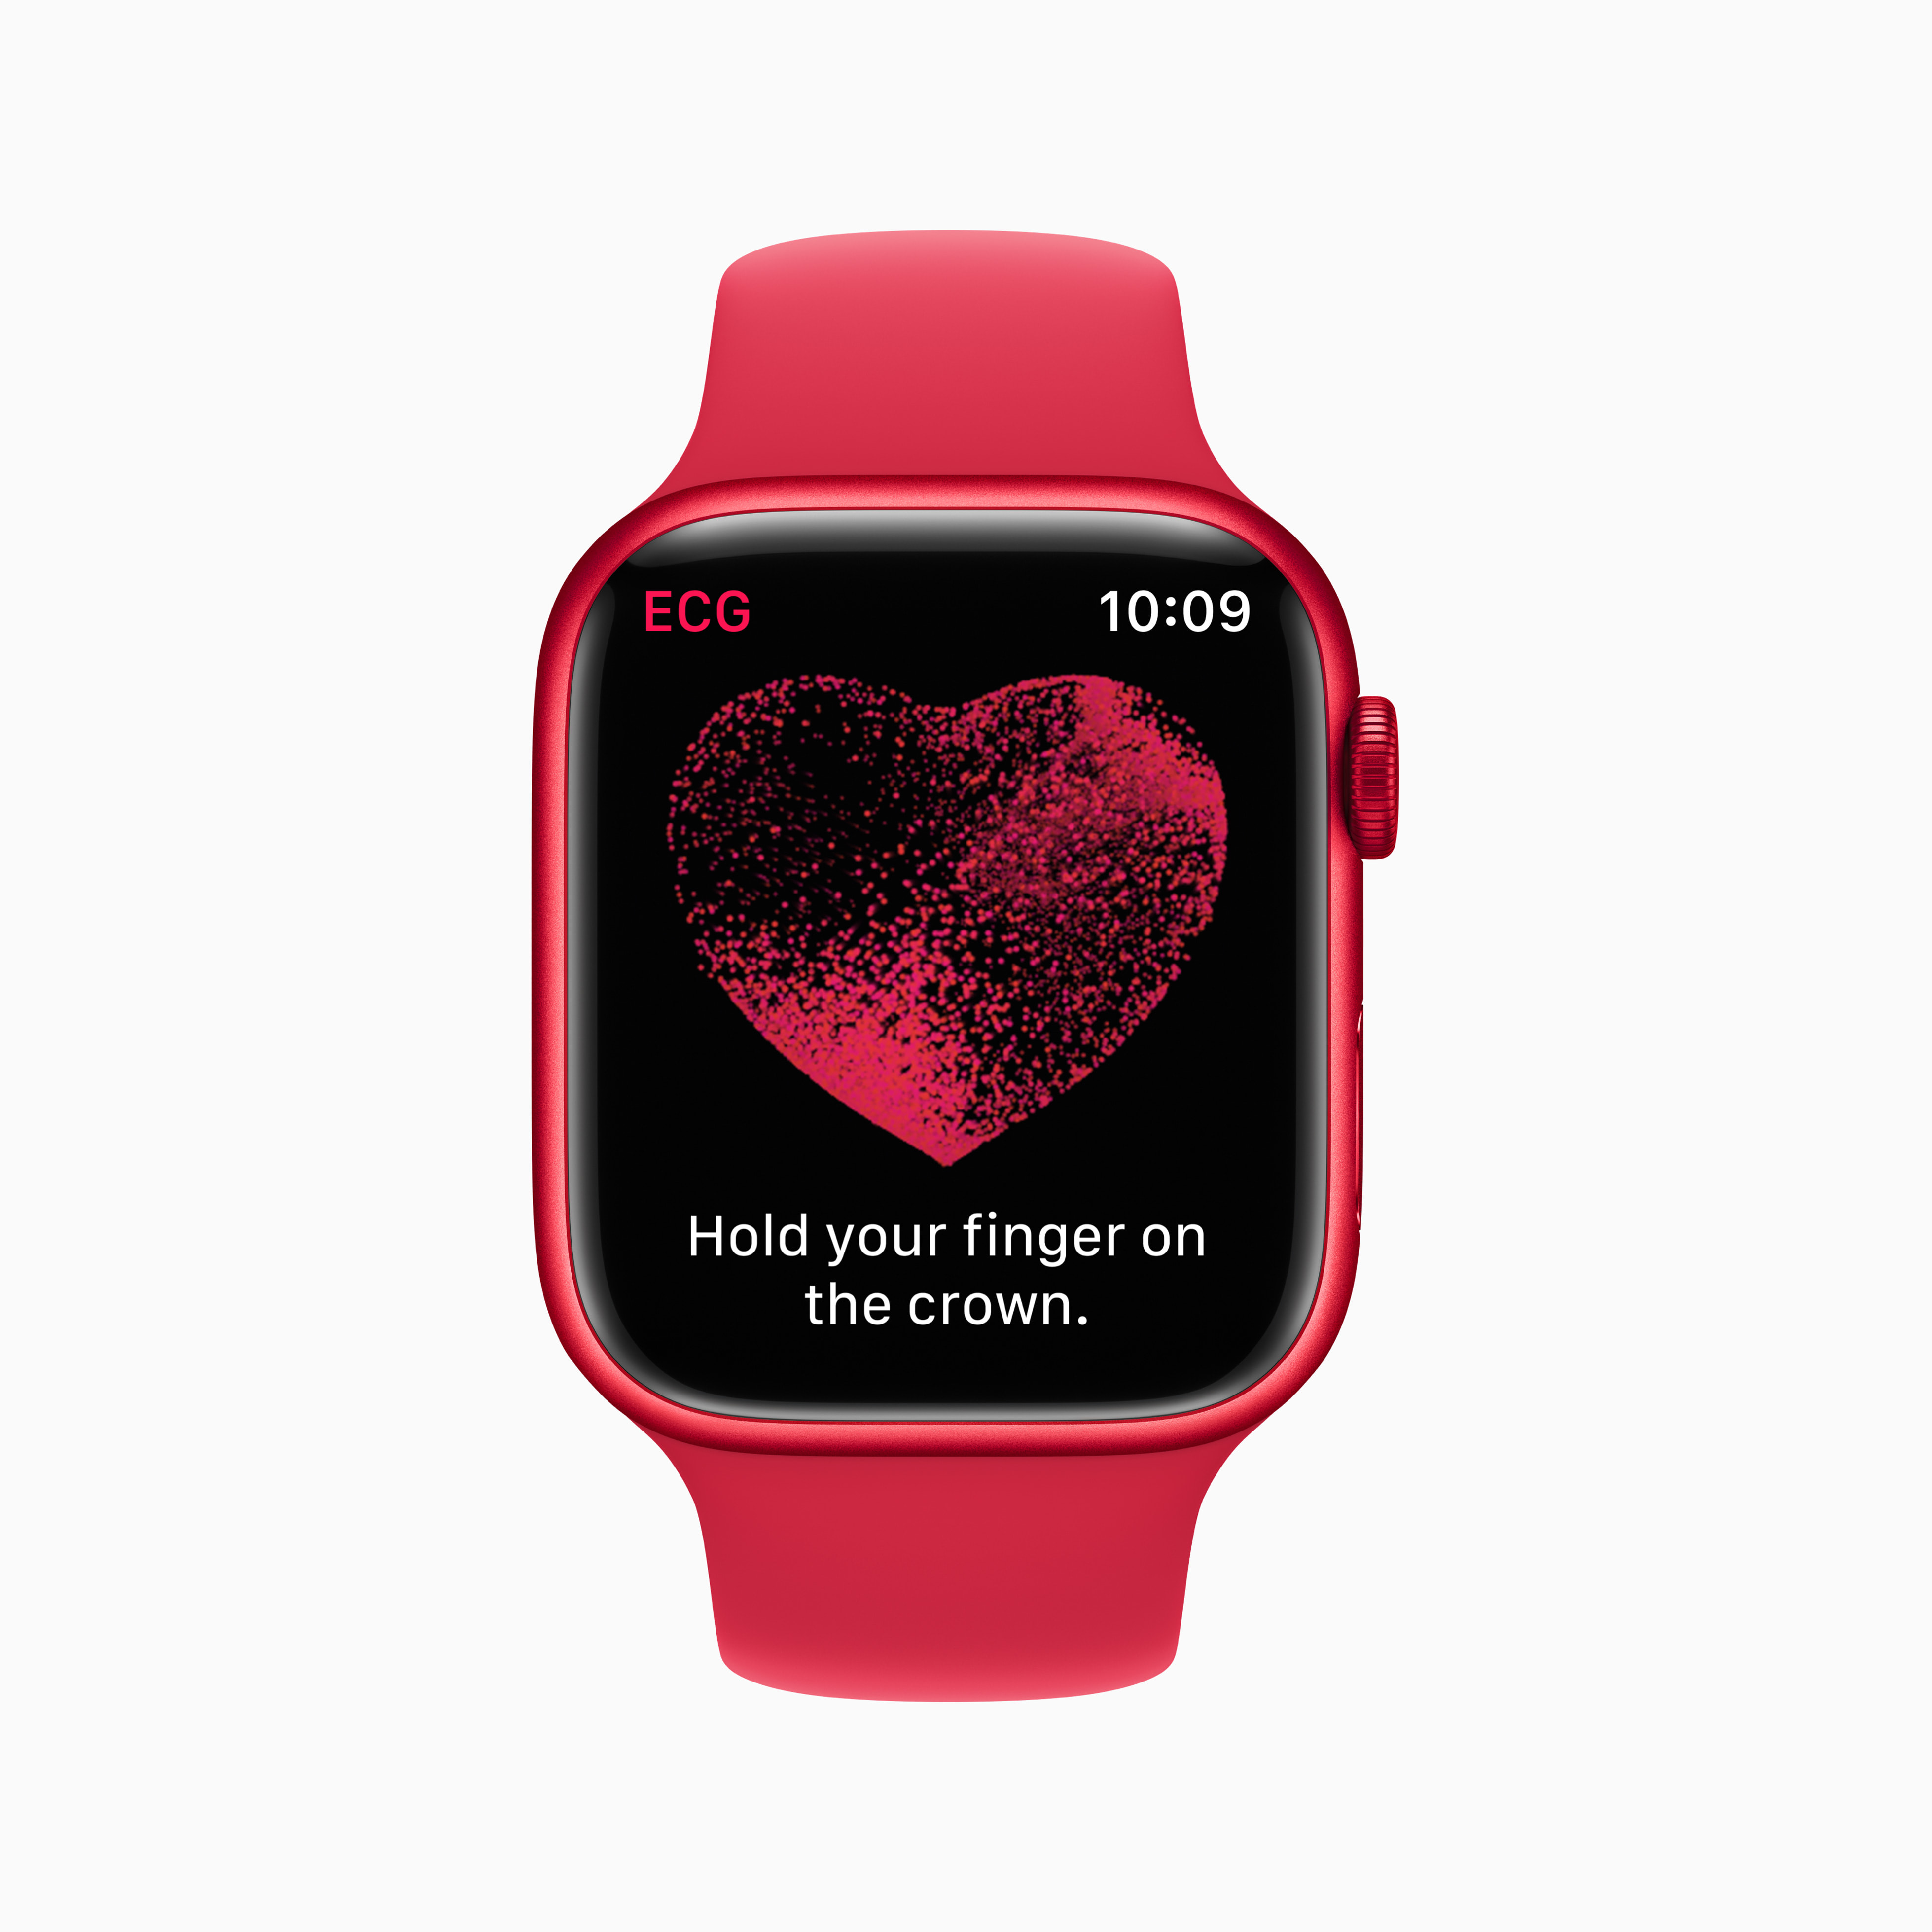 https://www.apple.com/newsroom/images/values/health/Apple-heart-health-ECG_inline.jpg.slideshow-xlarge_2x.jpg